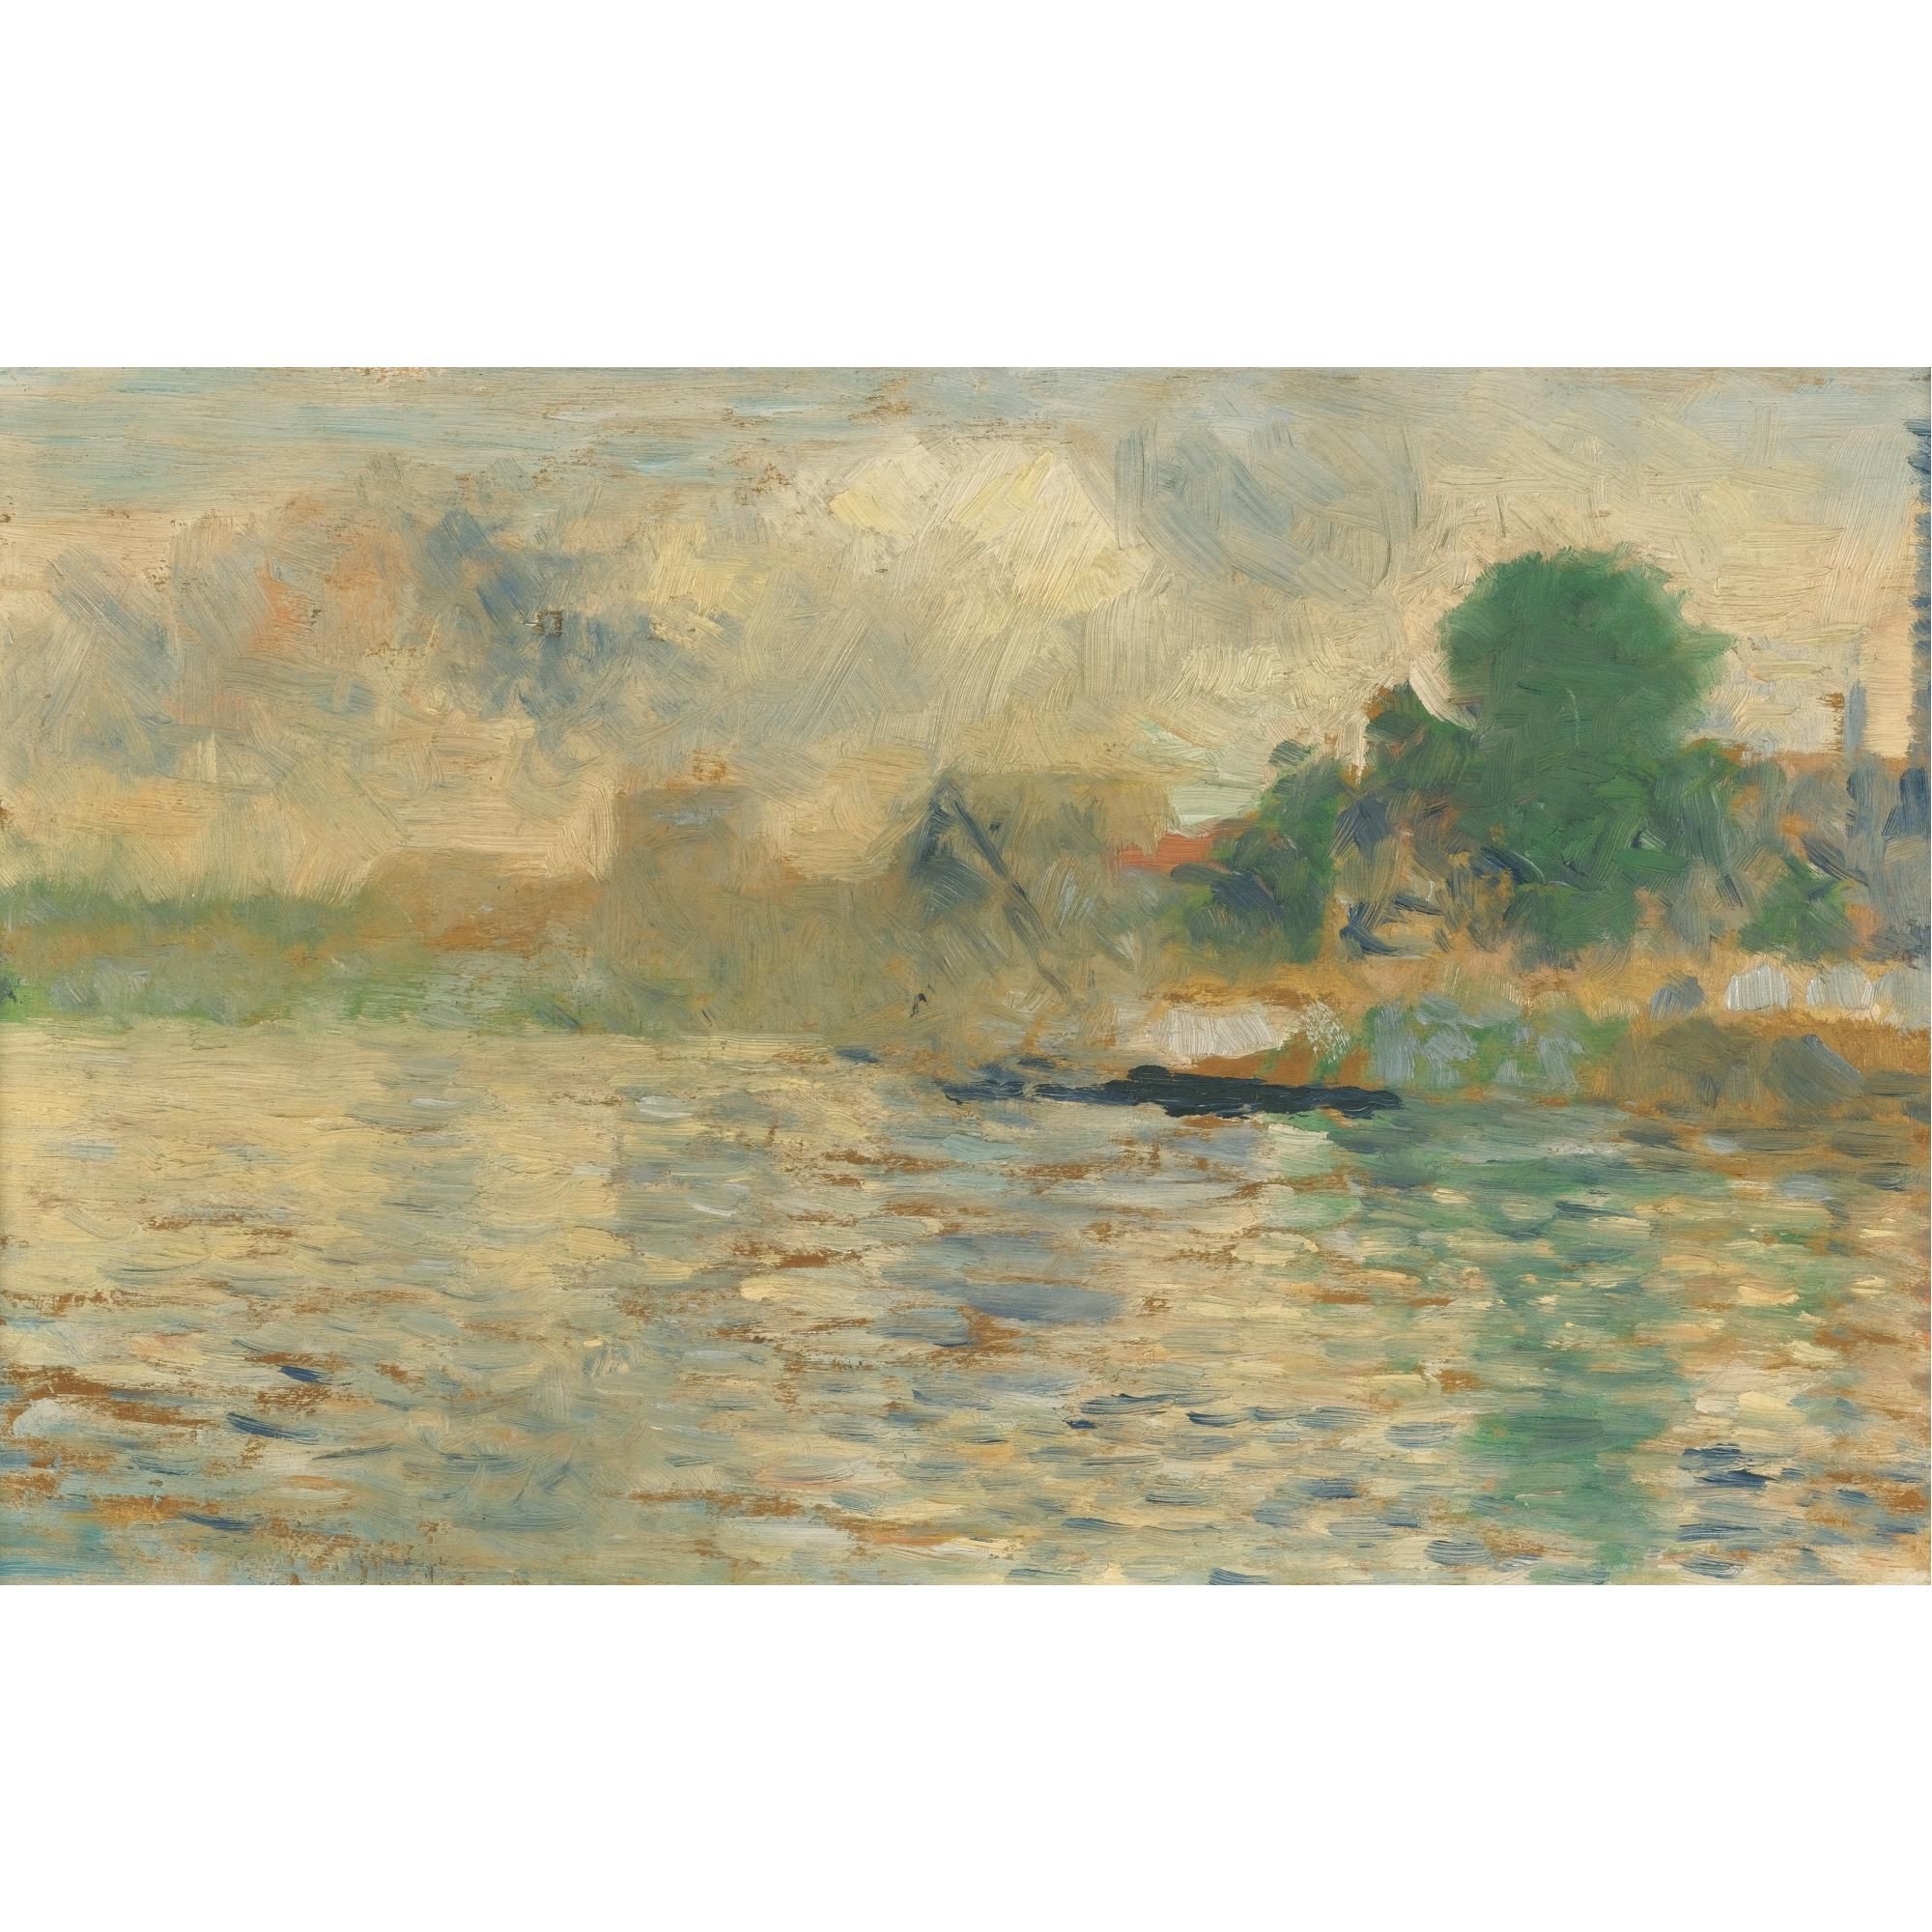 BERGE DE LA SEINE by Georges Seurat, FullFormat:circa,year,1884